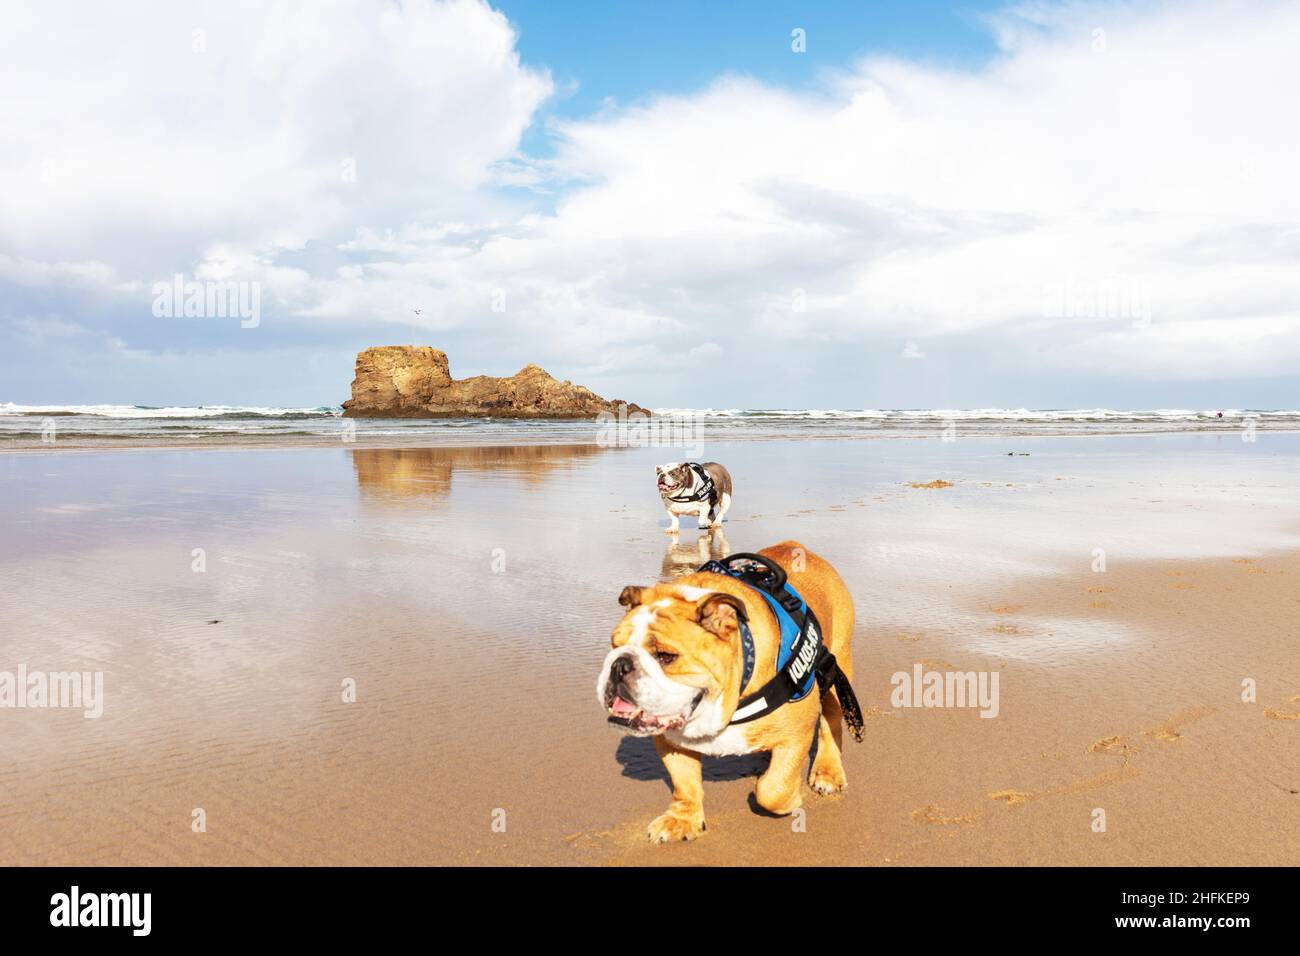 English Bulldog, British Bulldog, Dog on beach, Dog, Bulldog, Bulldogs, Perrenporth beach Cornwall, UK, England, dog walk on beach, dogs, beach, Stock Photo